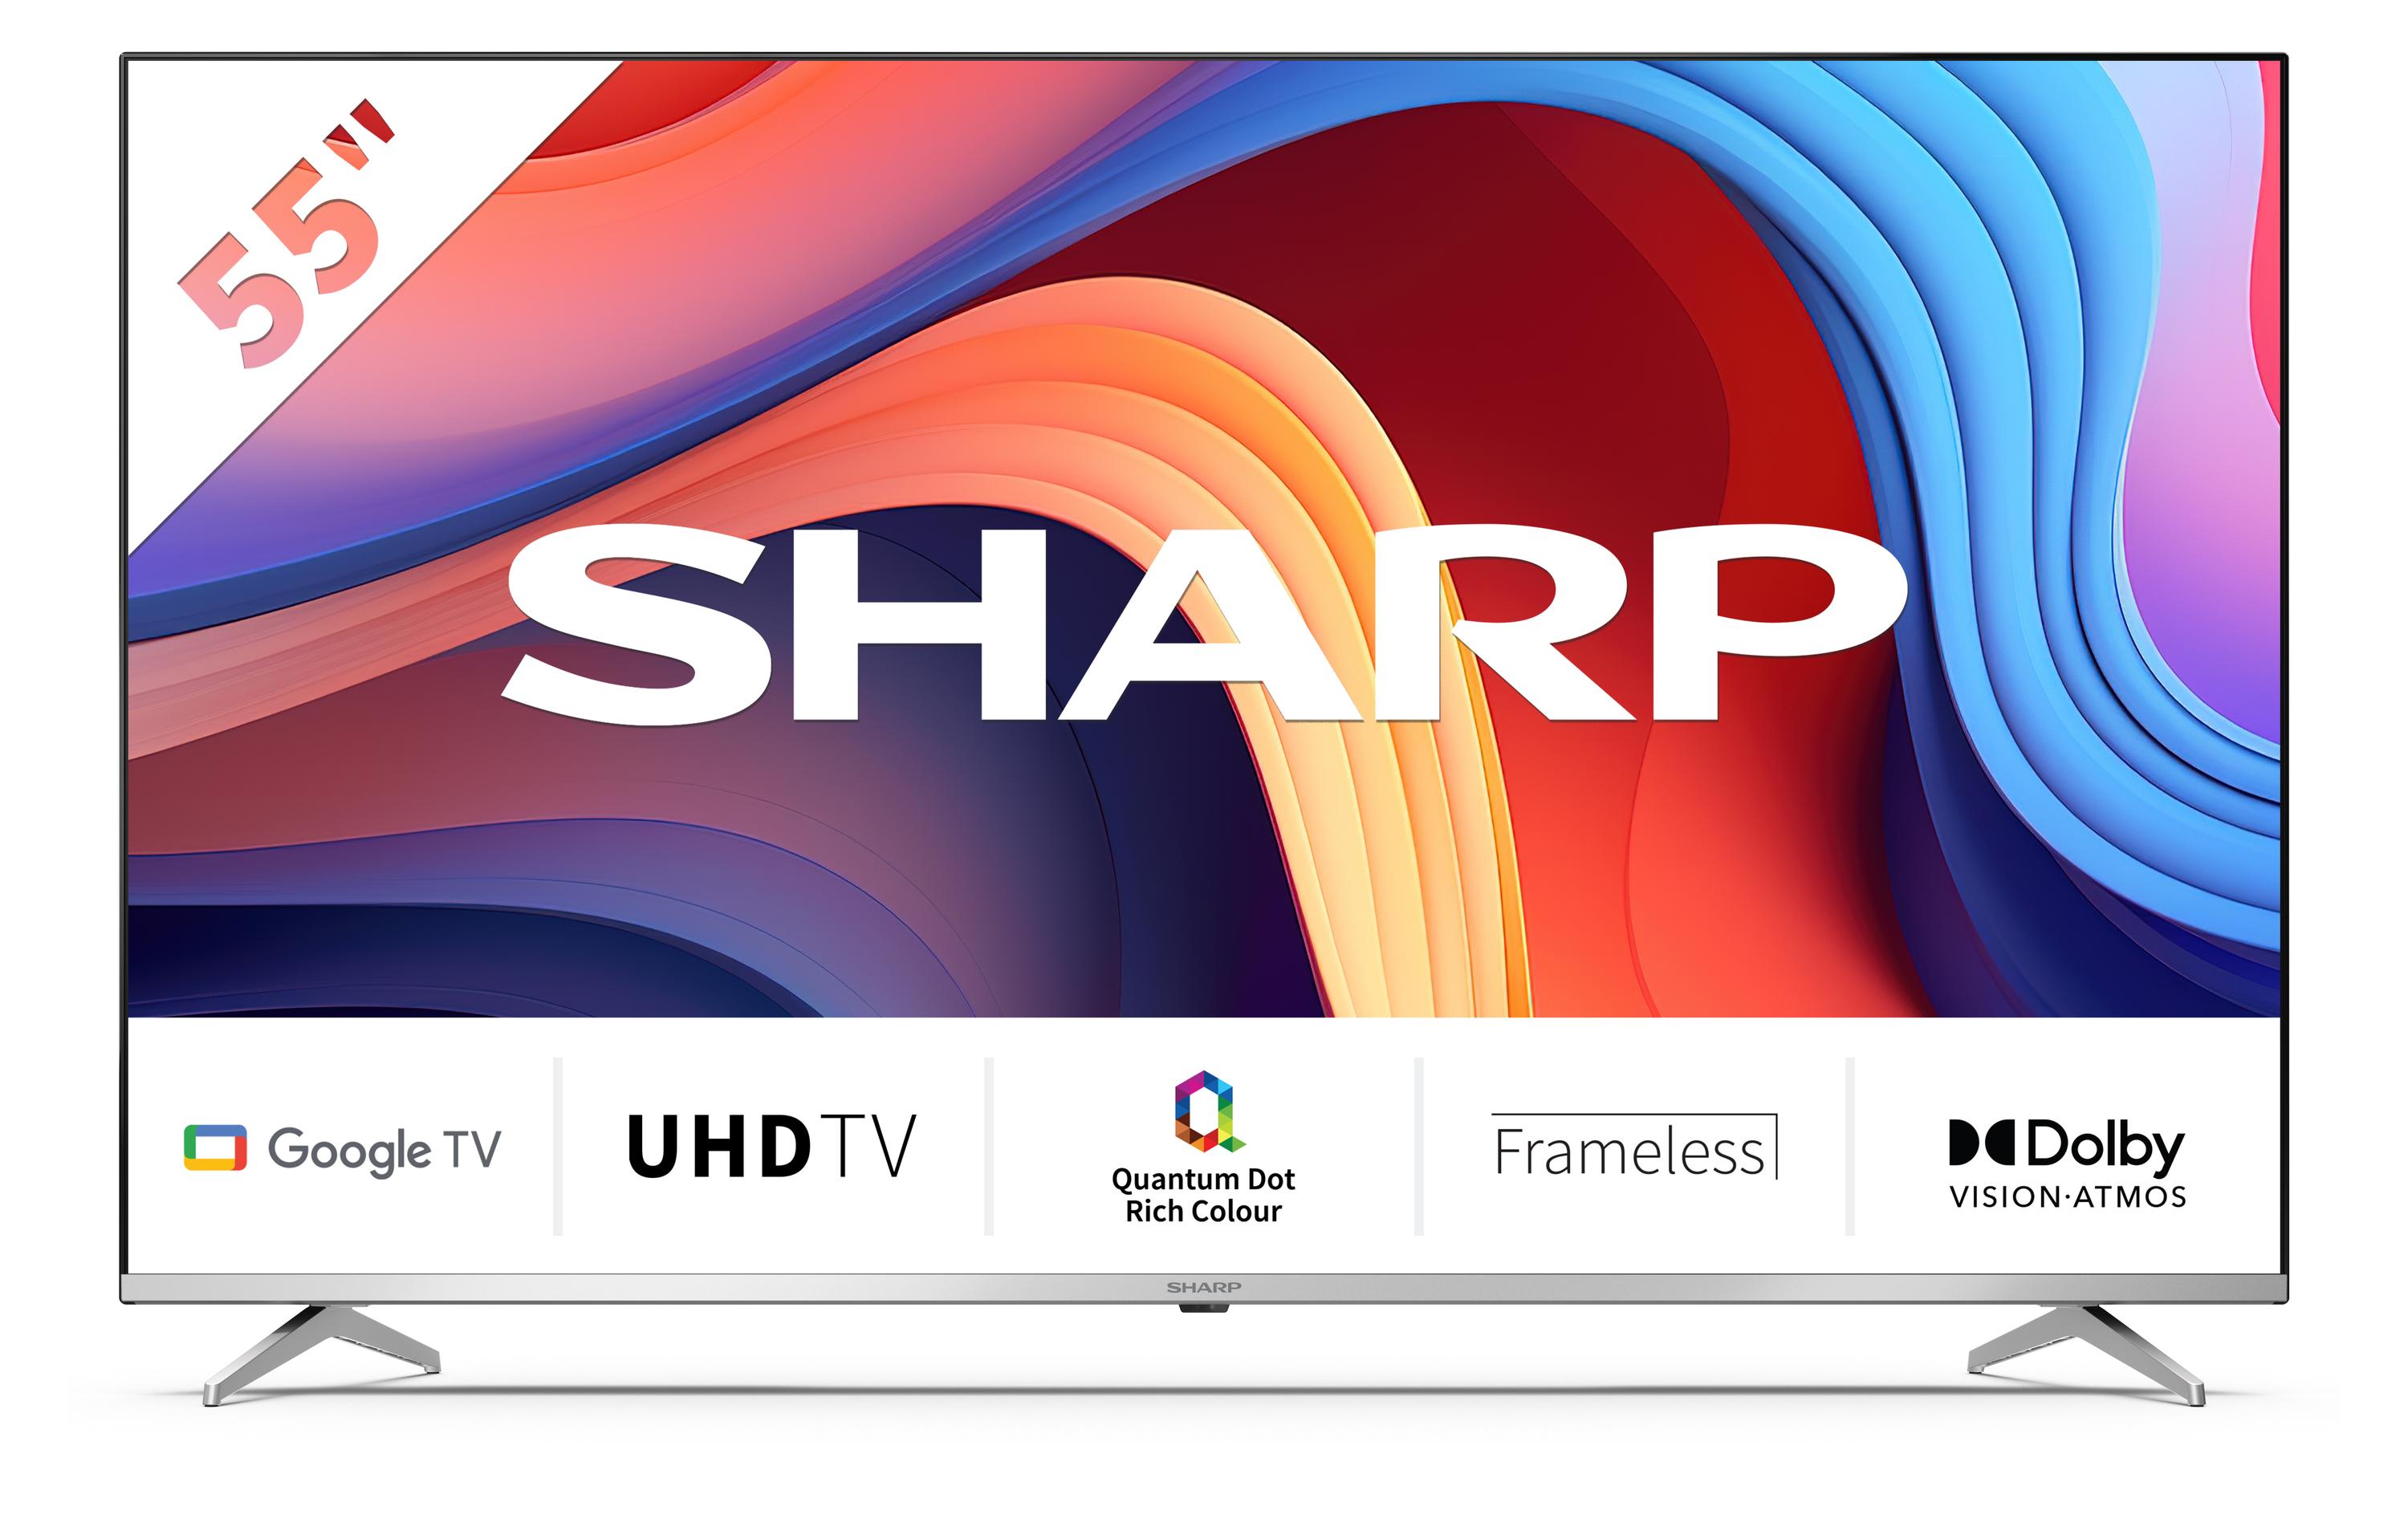 Sharp TV 55GP6260E 55, 3840 x 2160 (Ultra HD 4K), QLED